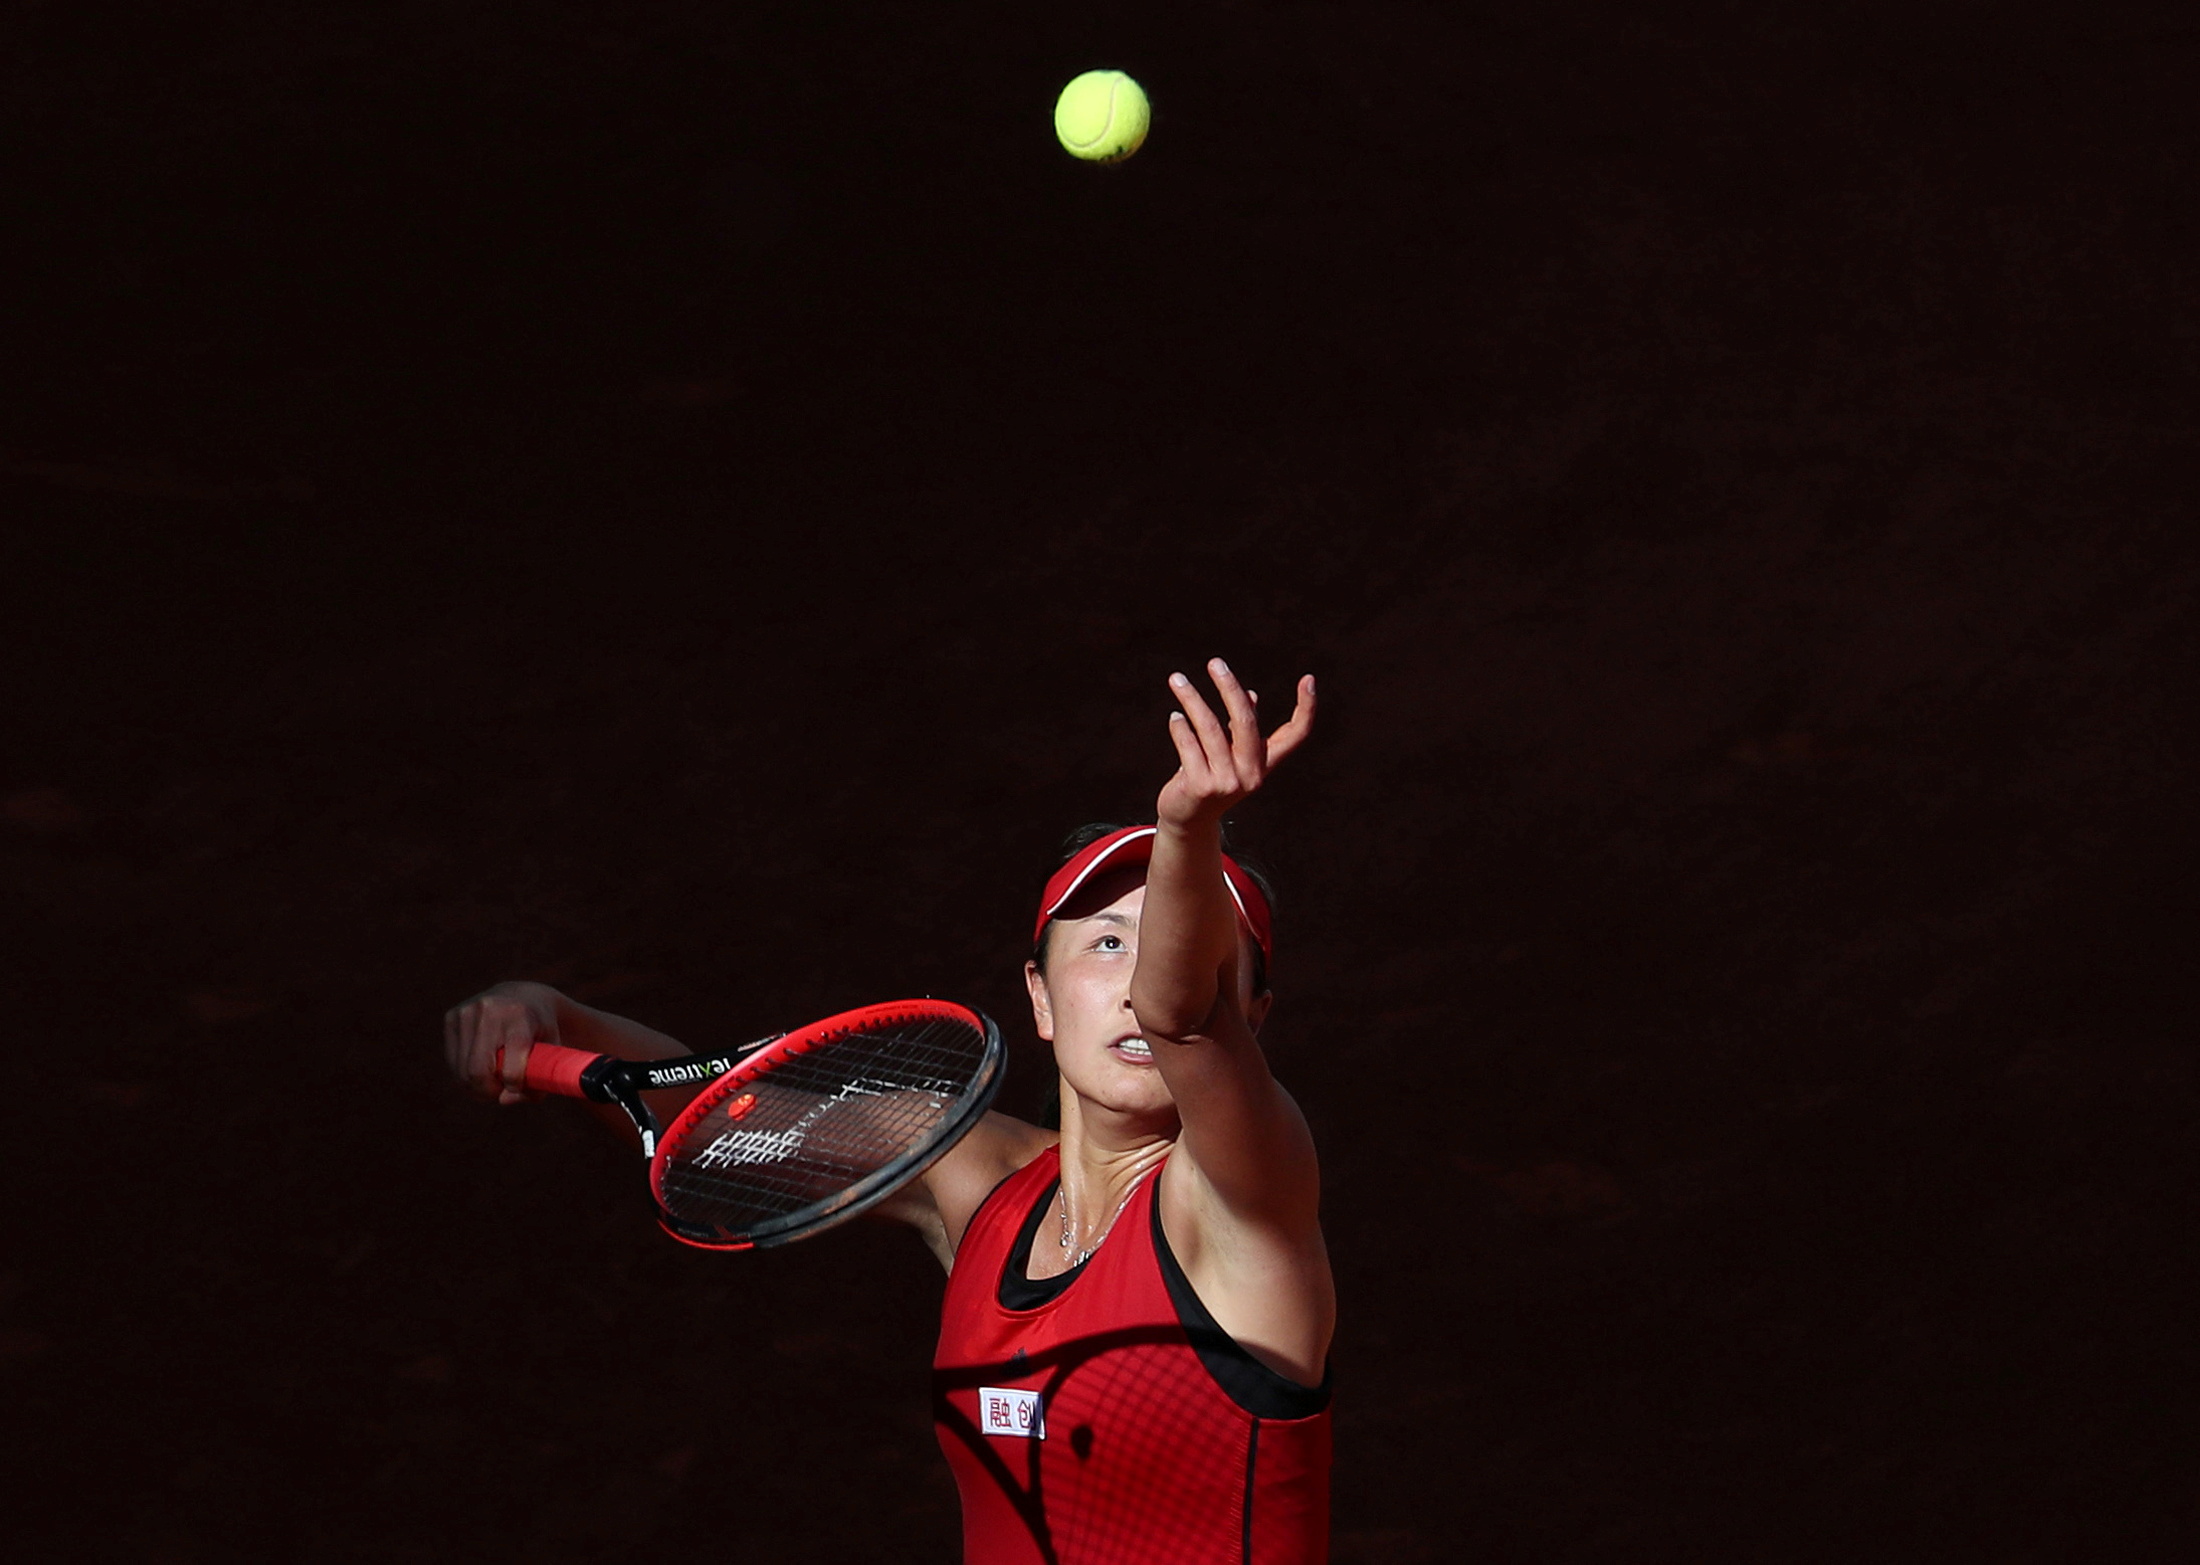 Tennis - WTA Mandatory - Madrid Open - Madrid, Spain - May 6, 2018   China's Peng Shuai in action against Spain's Garbine Muguruza during their round of 64 match   REUTERS/Susana Vera/File Photo